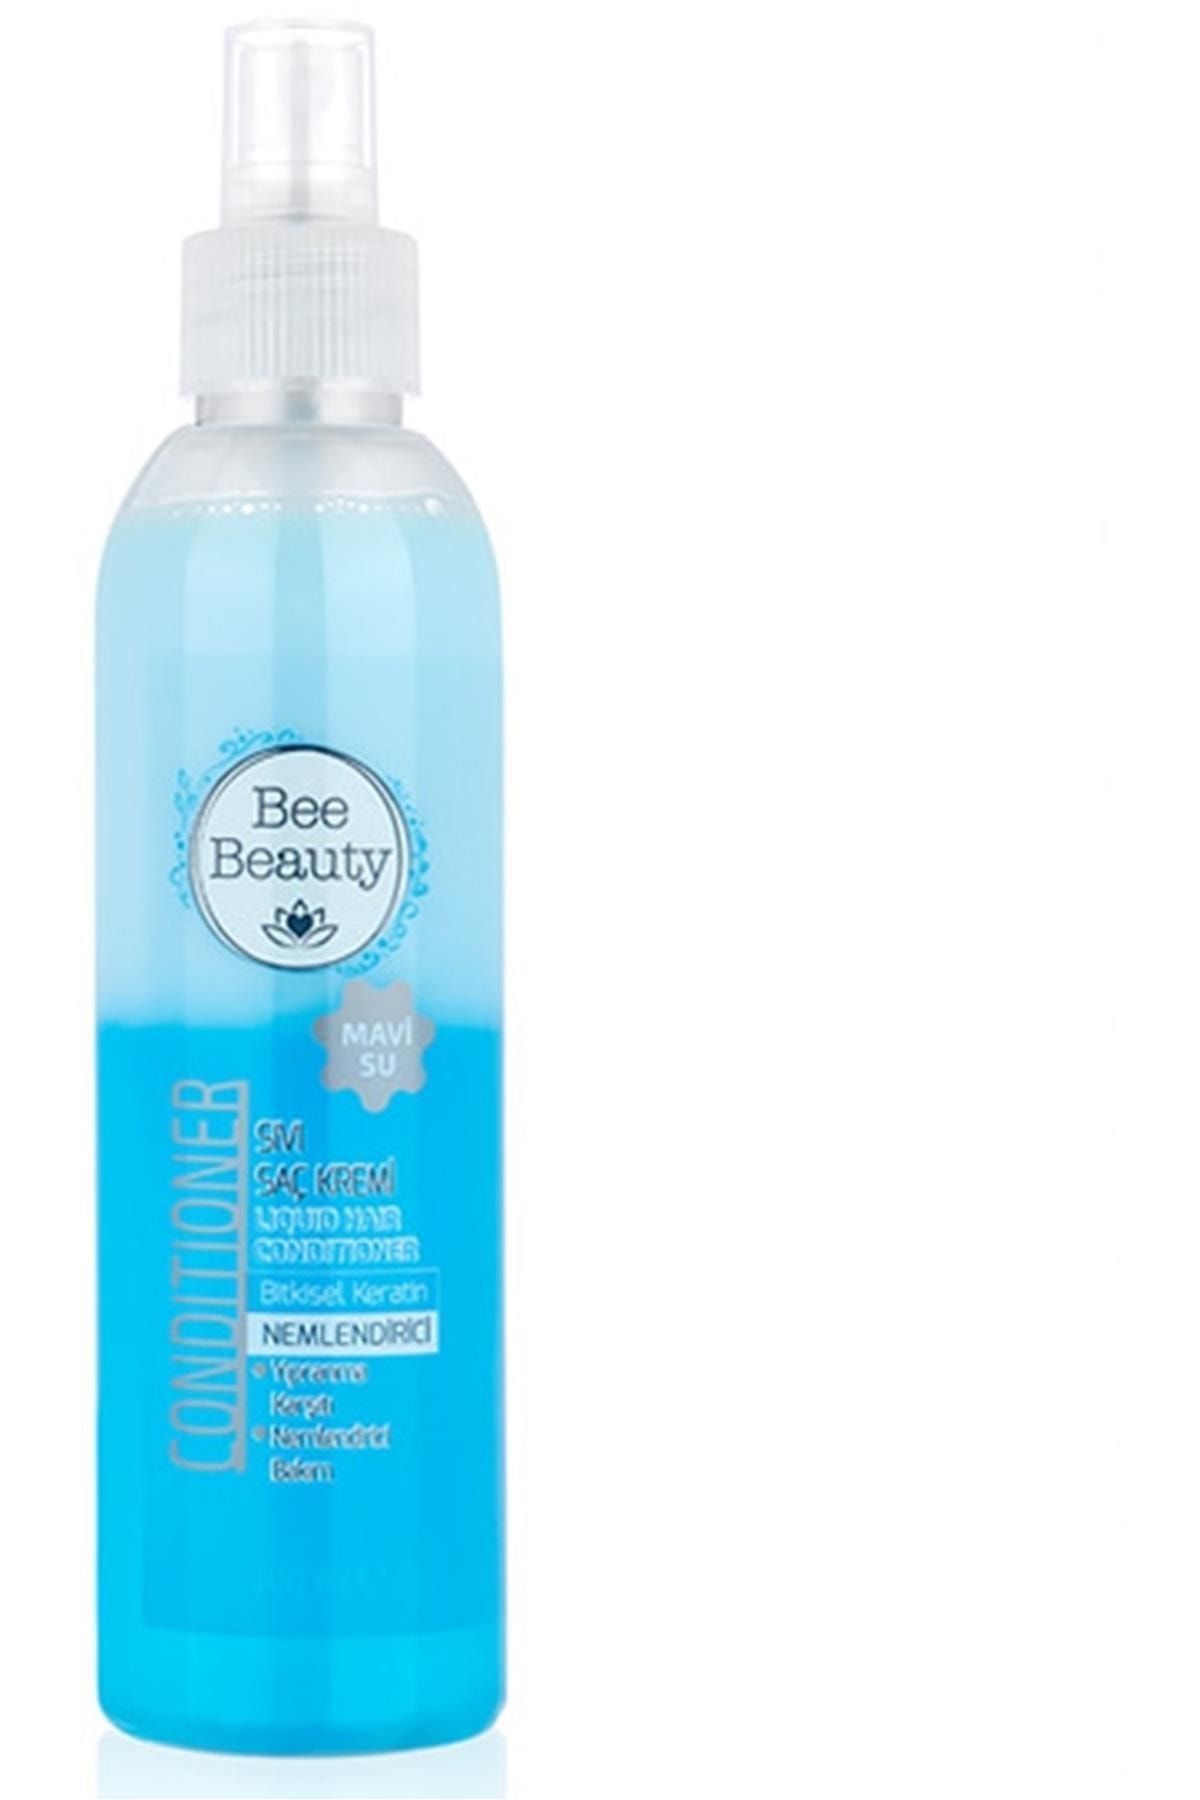 Bee Beauty Marka: Mavi Su Sıvı Saç Kremi 200 Ml Kategori: Saç Kremi